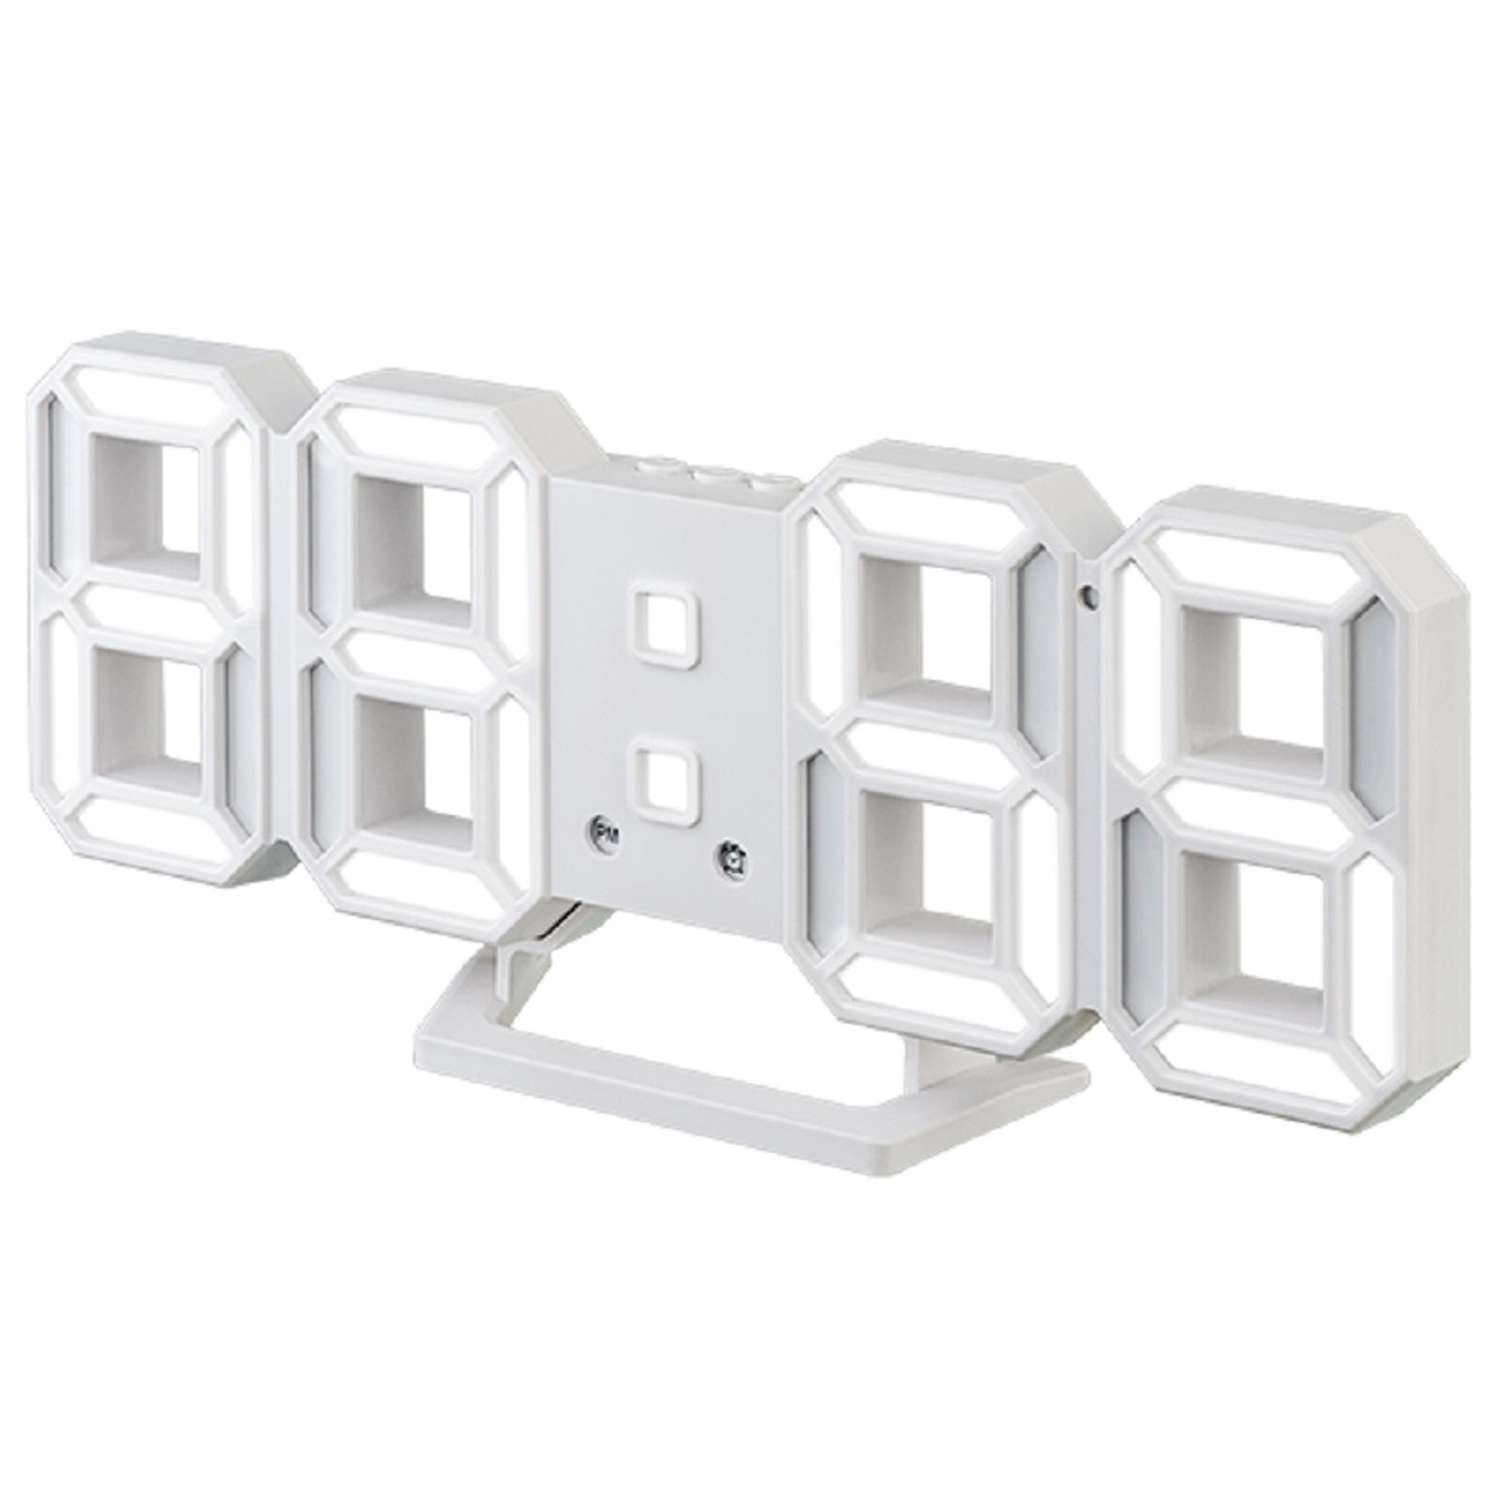 LED часы-будильник Perfeo LUMINOUS 2 белый корпус белая подсветка PF-6111 - фото 1